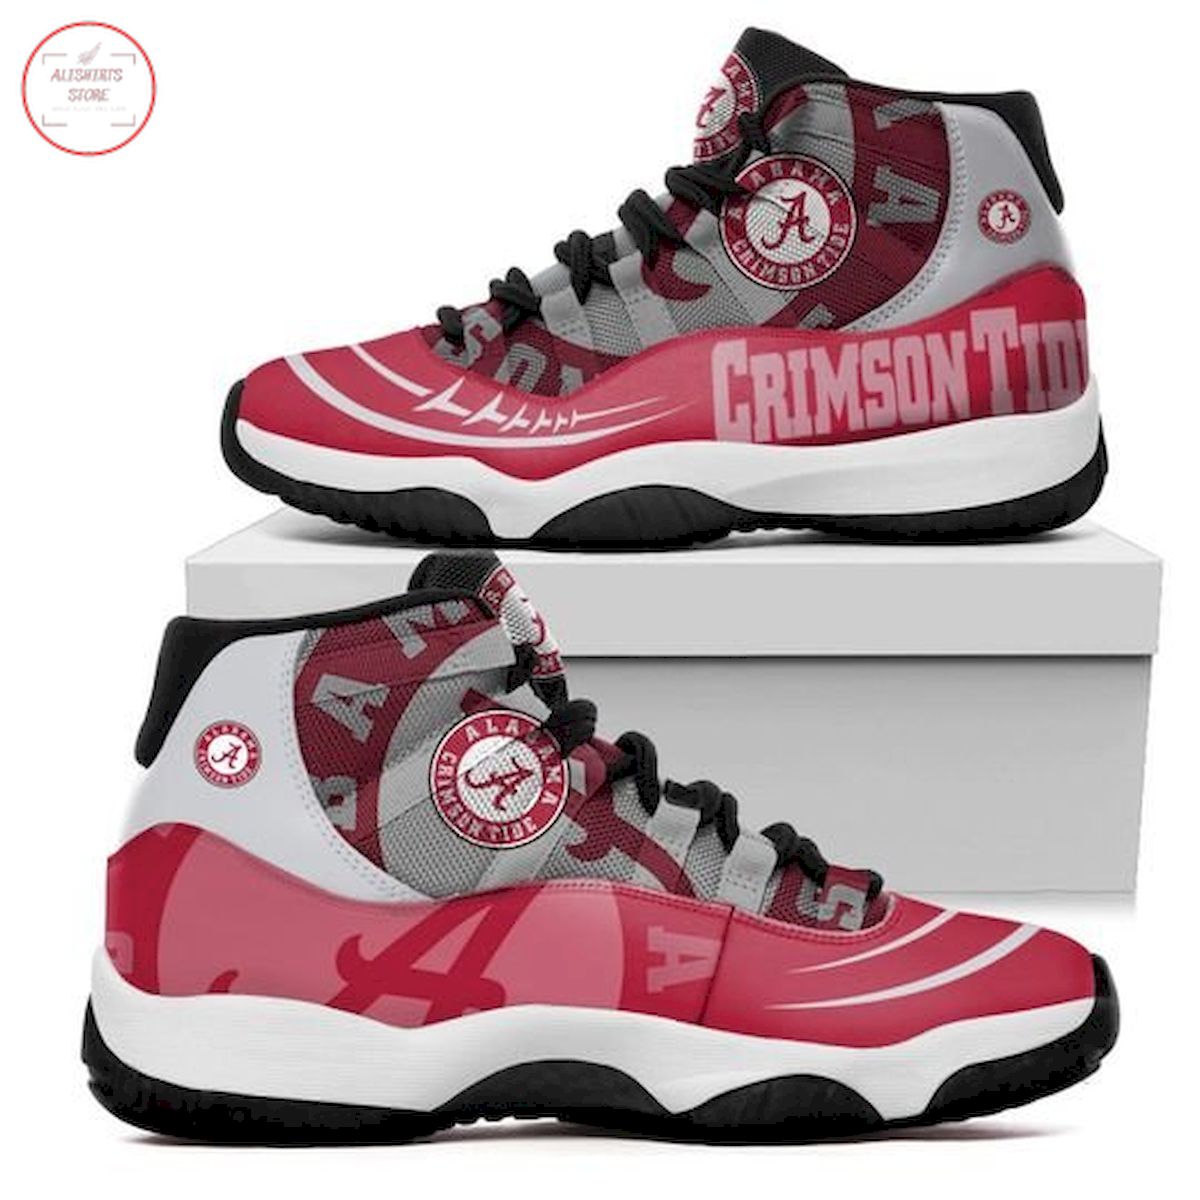 NCAA Alabama Crimson Tide New Air Jordan 11 Sneaker Shoes